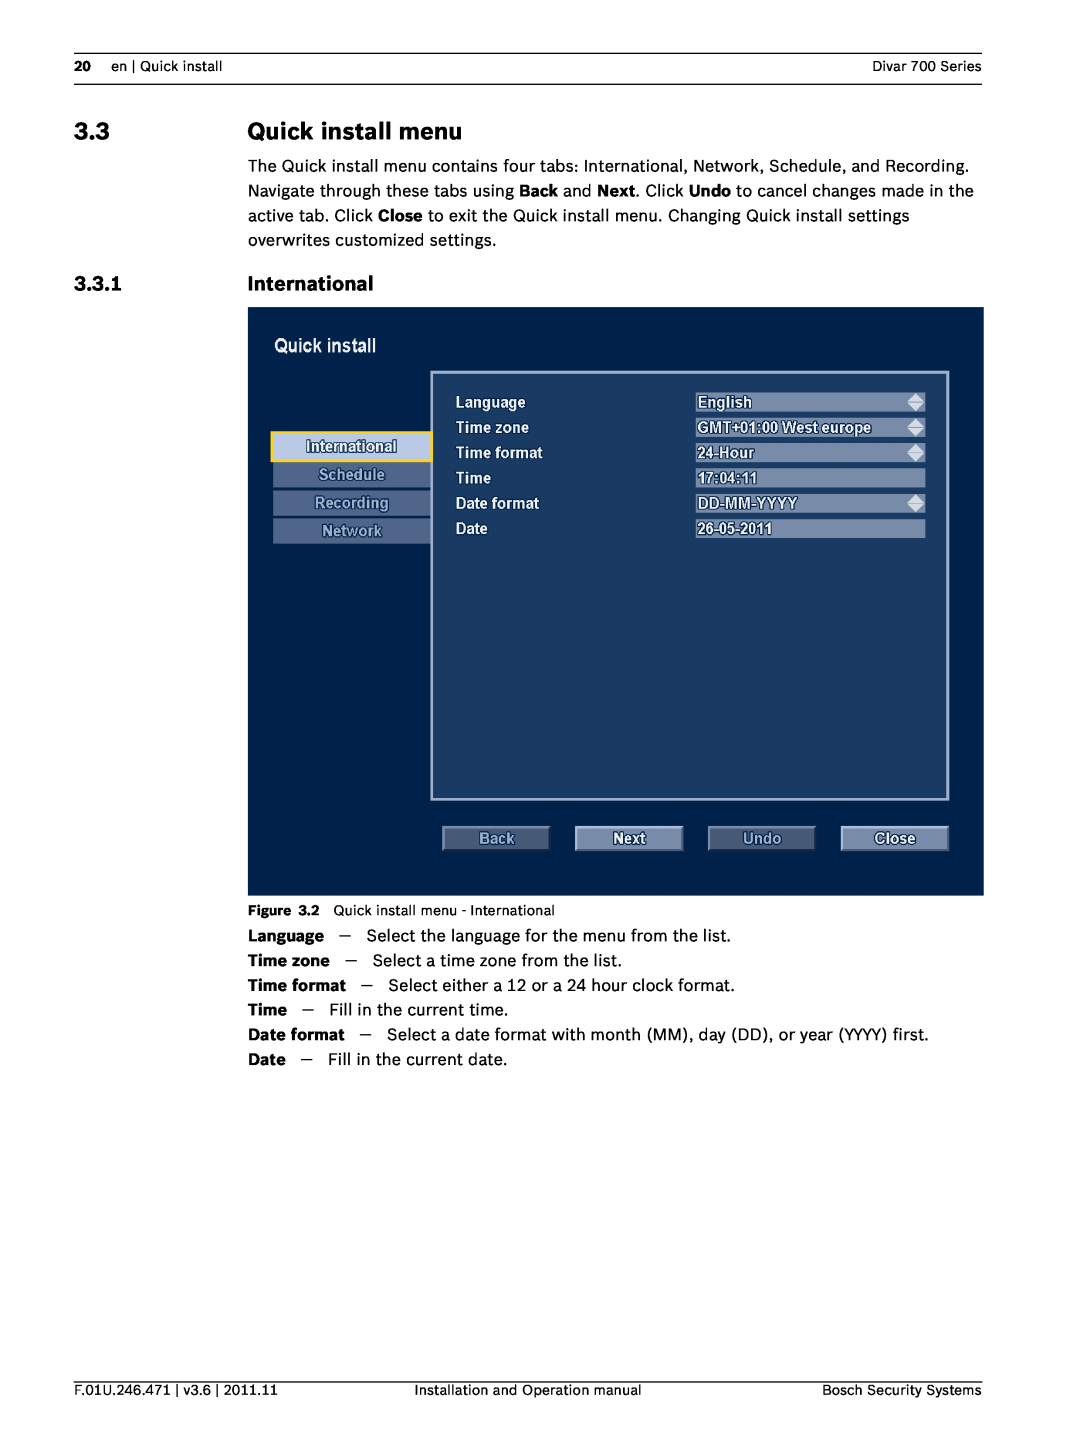 Bosch Appliances 700 operation manual Quick install menu, 3.3.1, International 